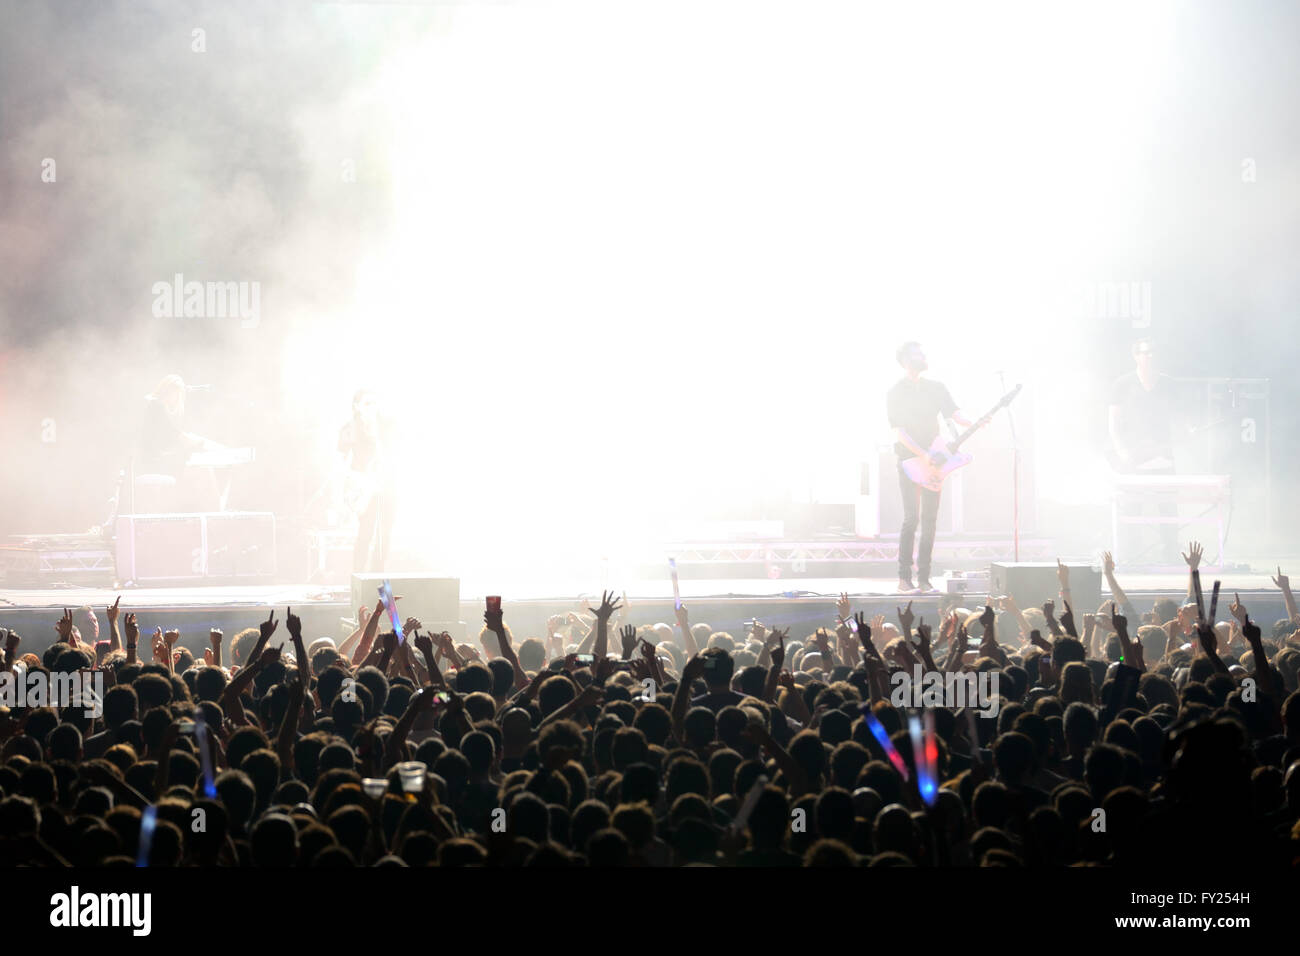 BILBAO, Spanien - 31 Okt.: Placebo (Band) live-Performance beim Bime-Festival am 31. Oktober 2014 in Bilbao, Spanien. Stockfoto